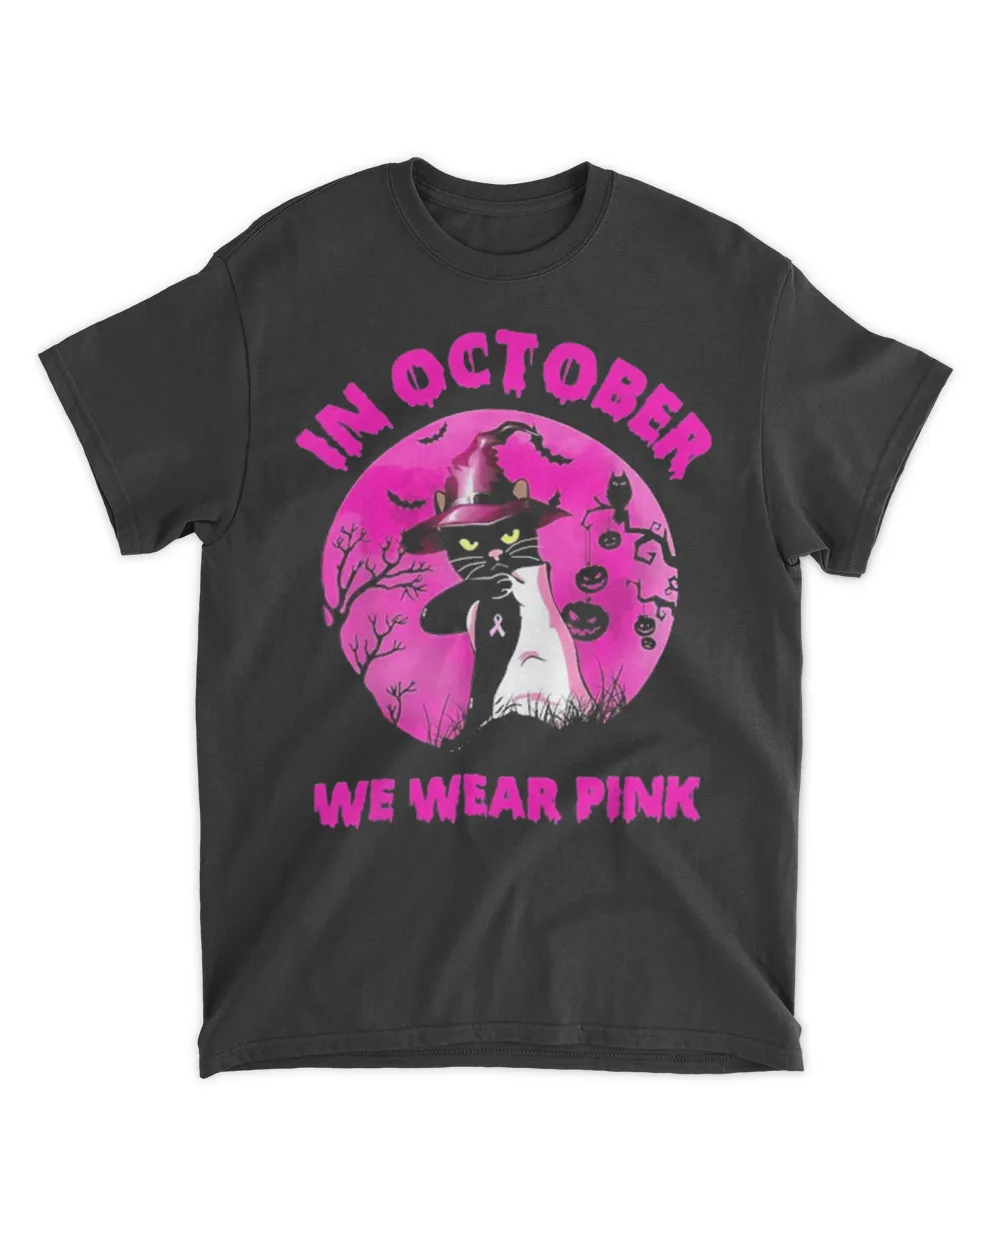 In October We Wear Pink Cat Pumpkin Breast Cancer Halloween Shirt